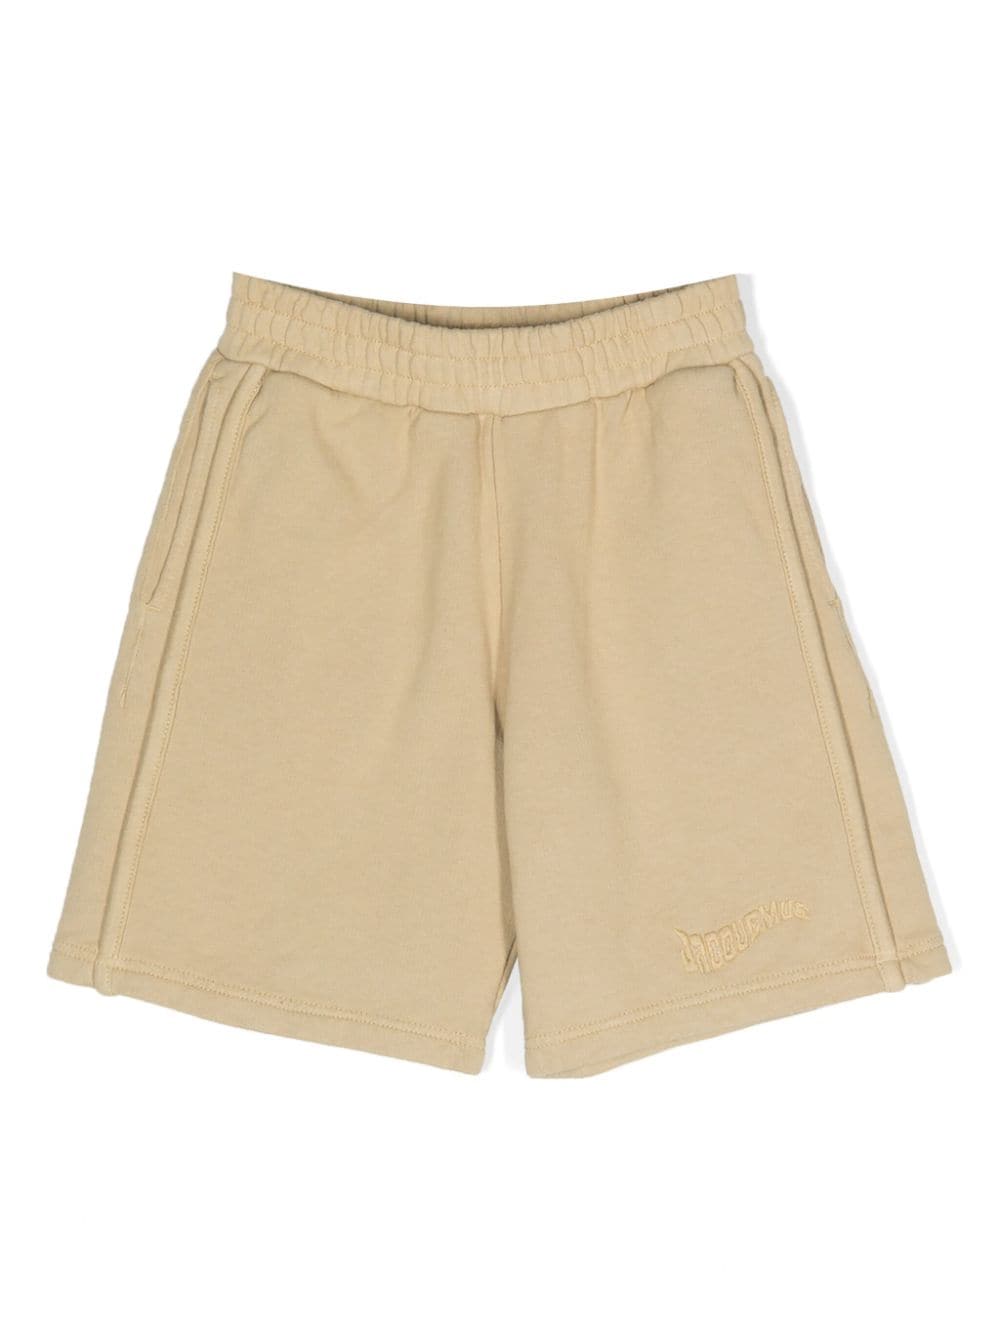 Le Camargue cotton shorts - Rubino Kids